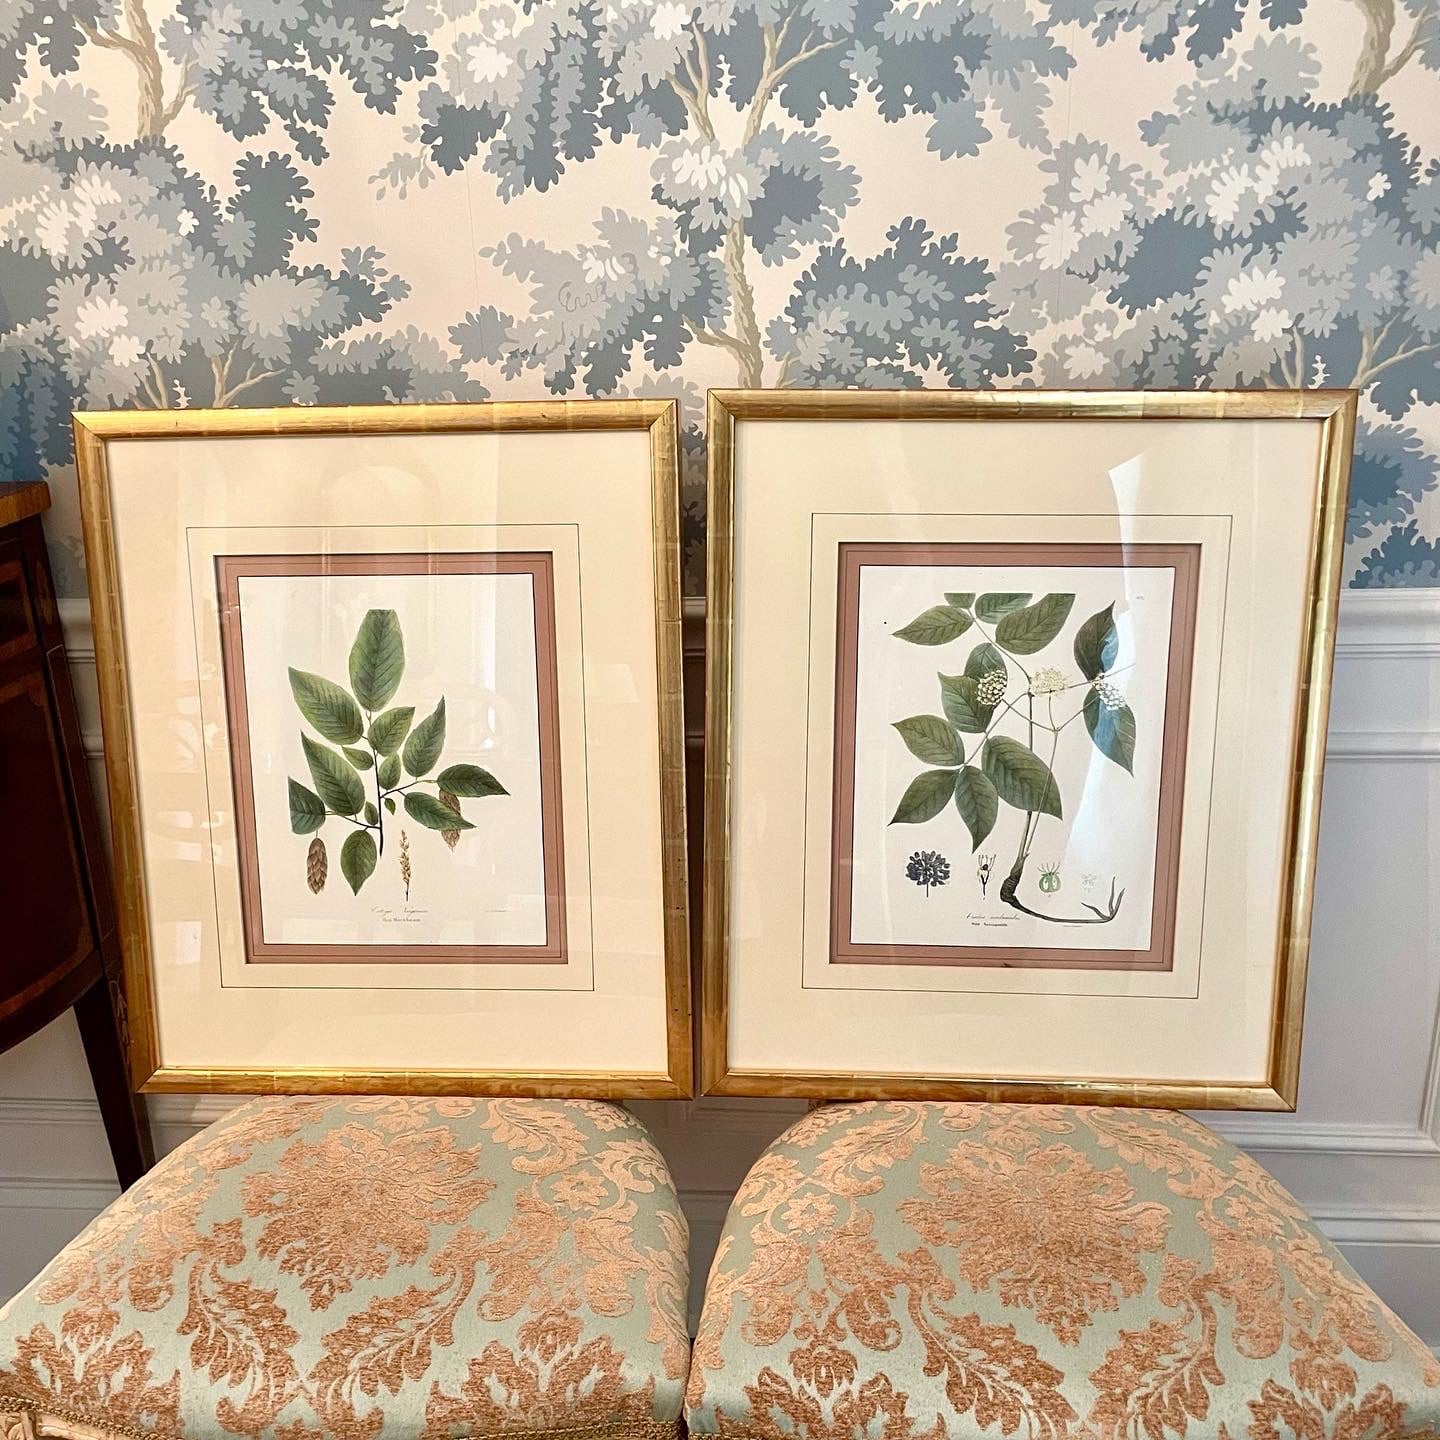 Gorgeous Pair (2) Large Botanical Framed Prints In Beautiful Gold Gilt Frames!